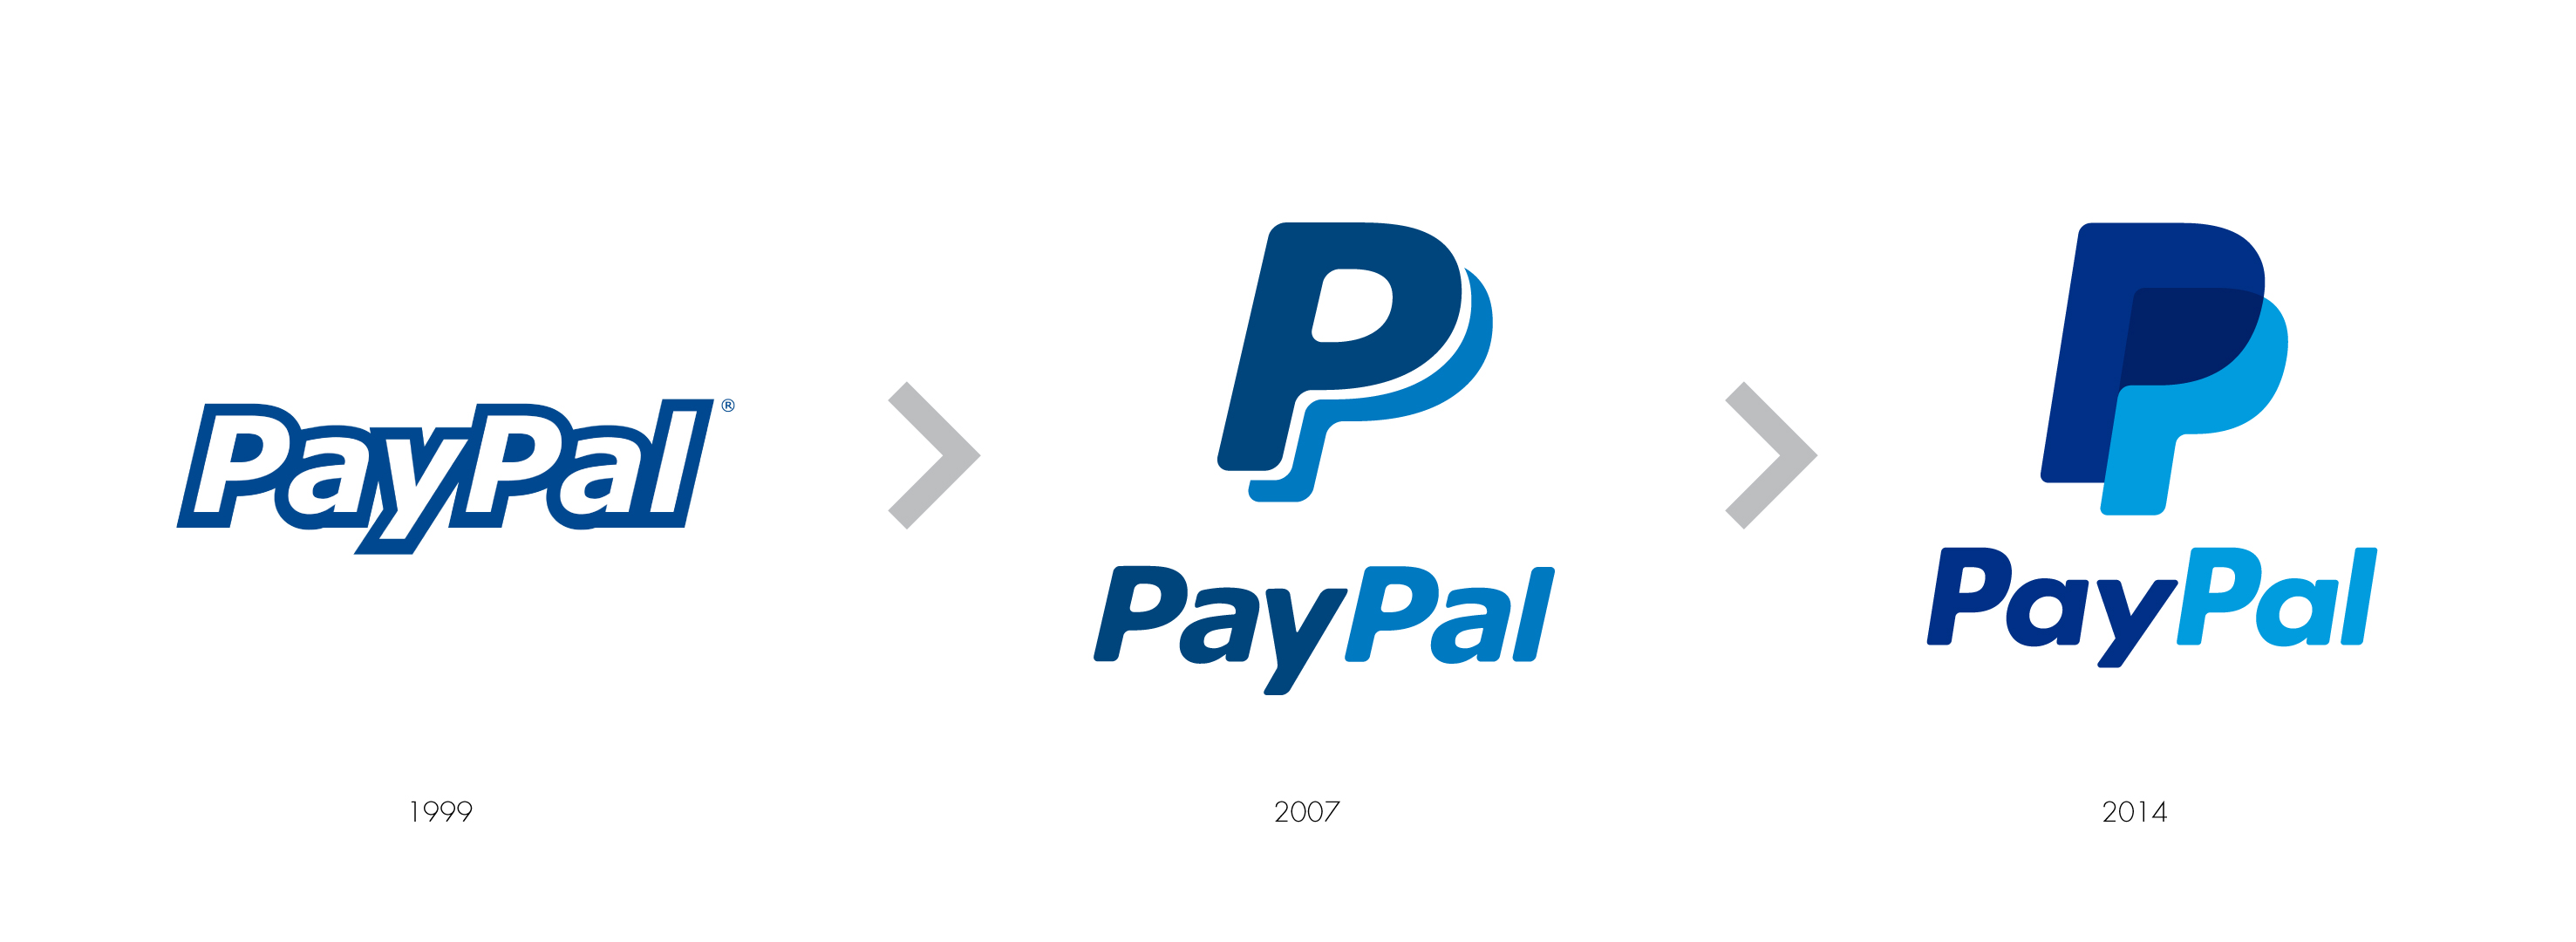 paypal logo 2015